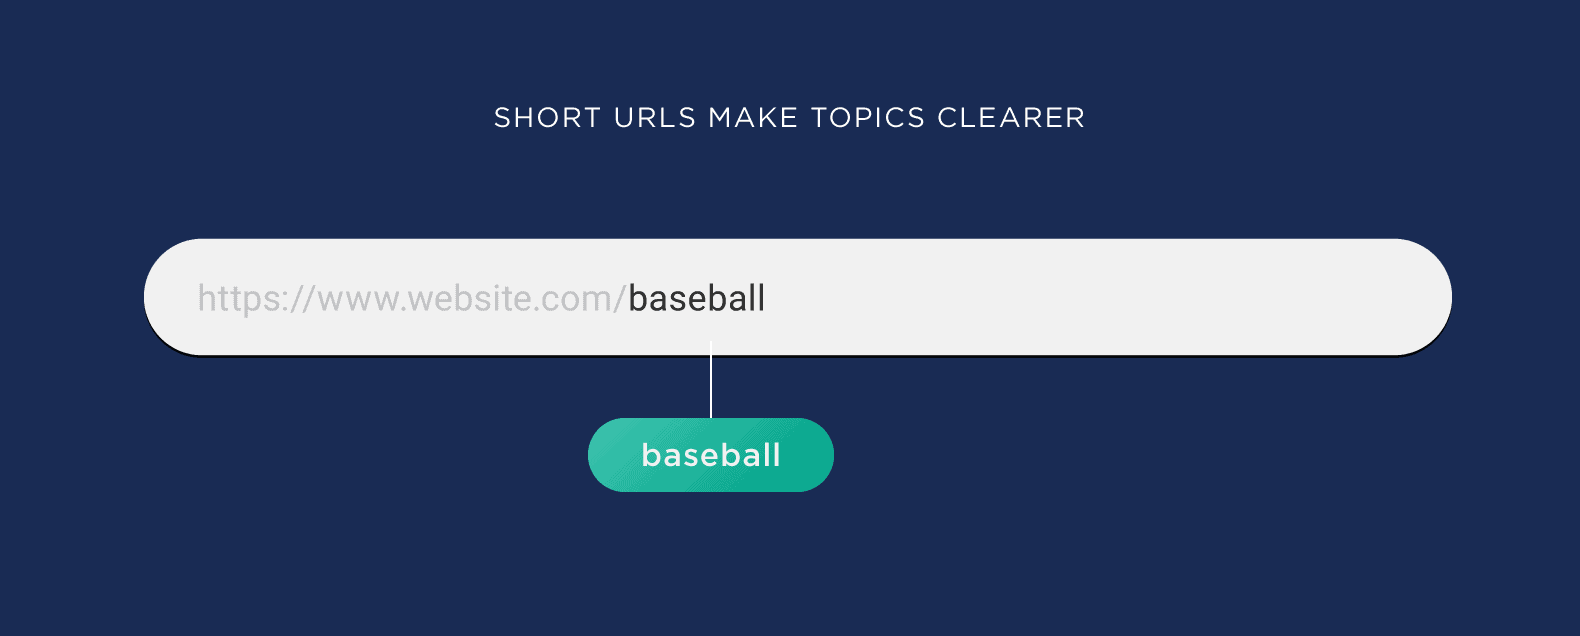 Short URLs make topics clearer